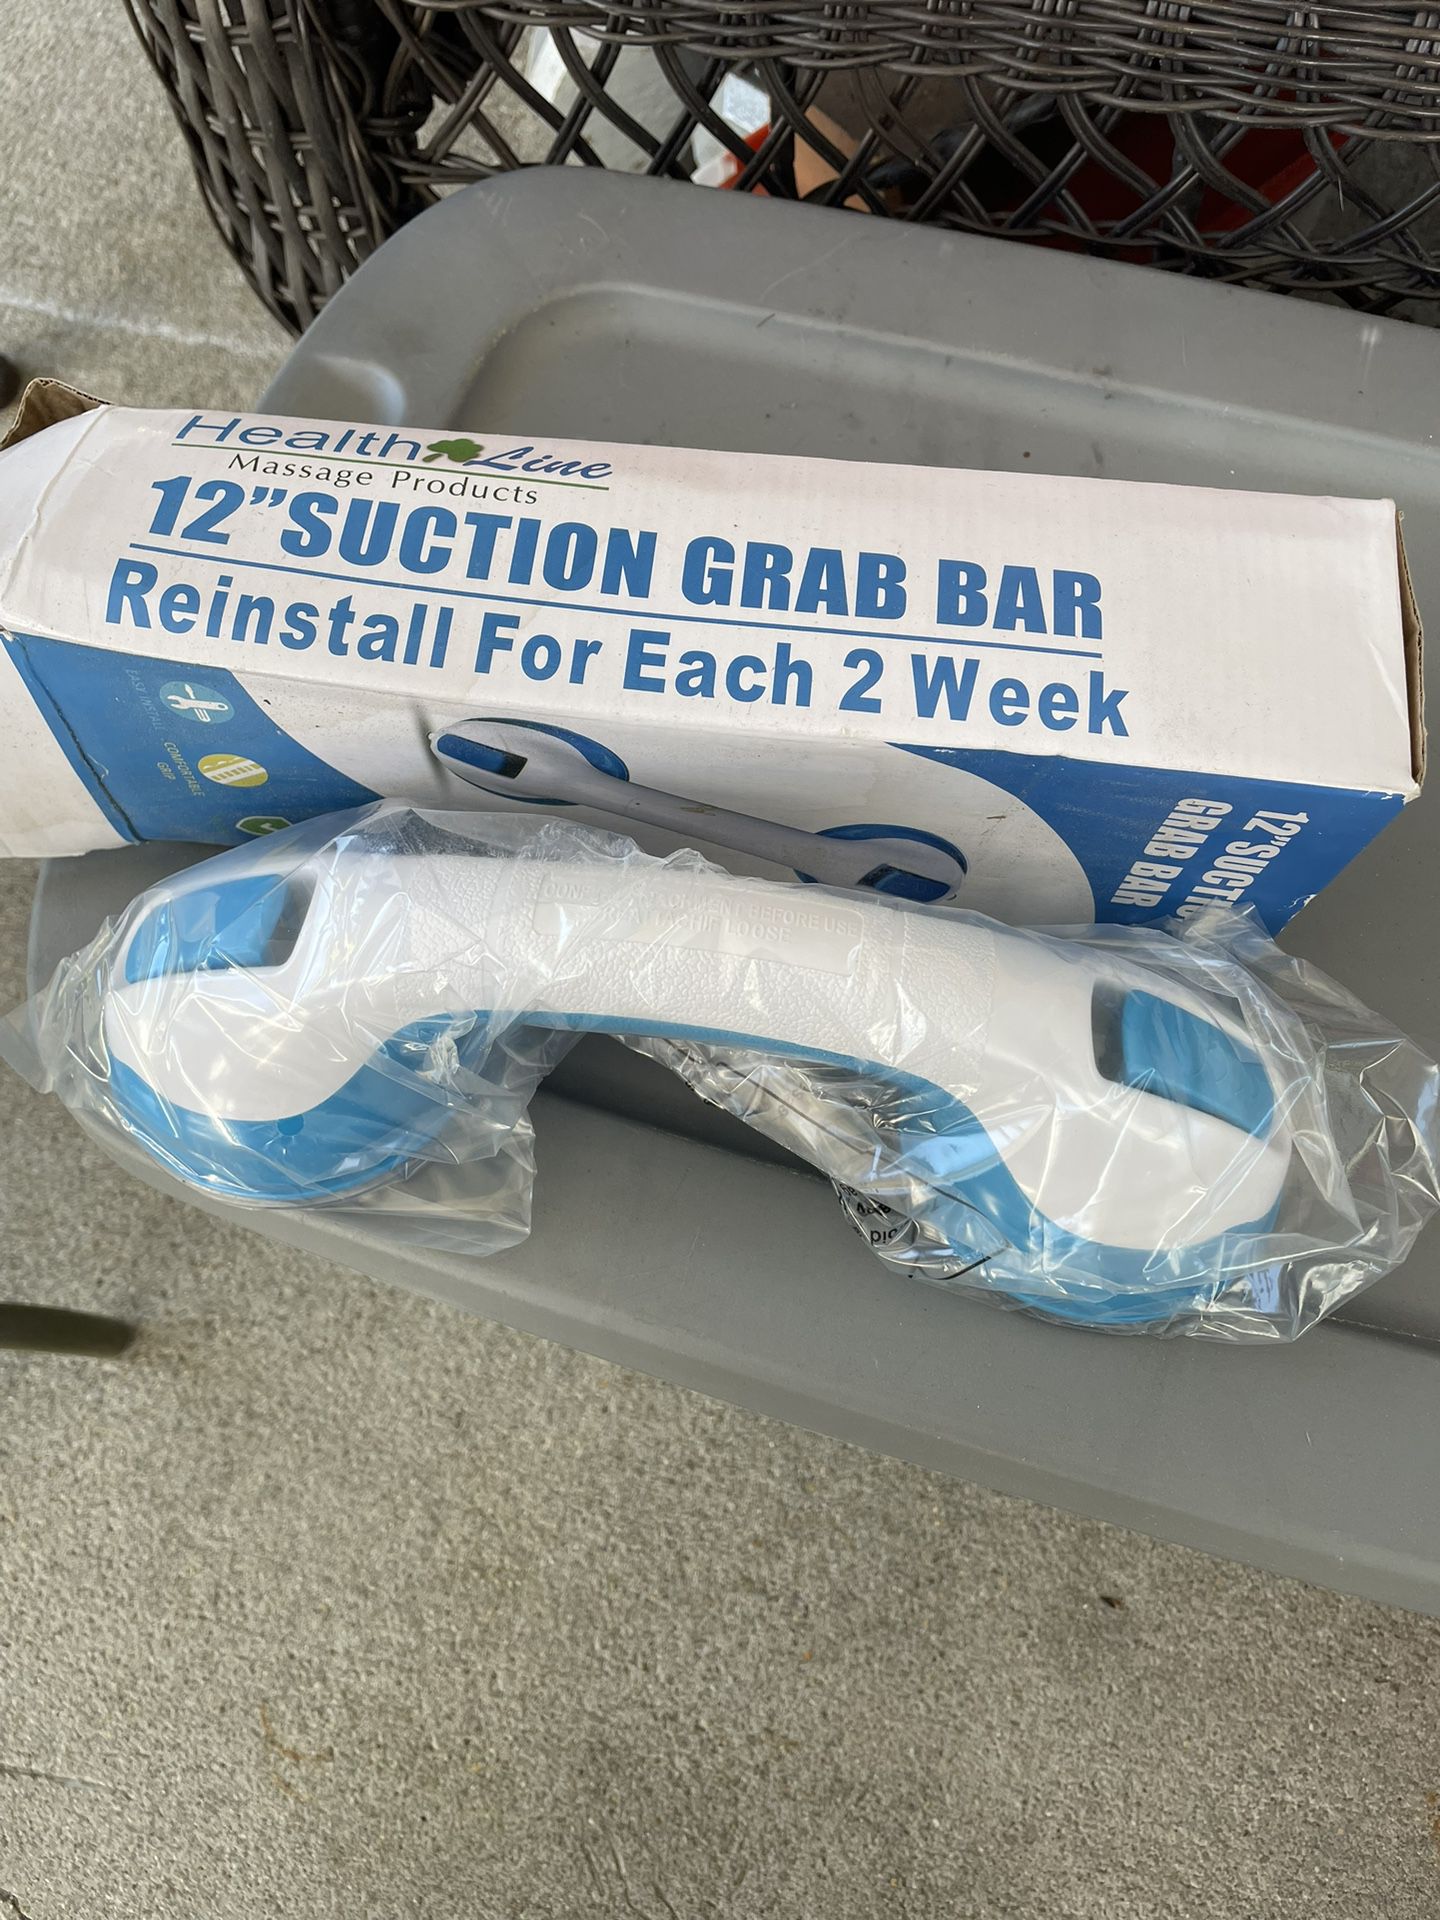 12” Suction Grab Bar